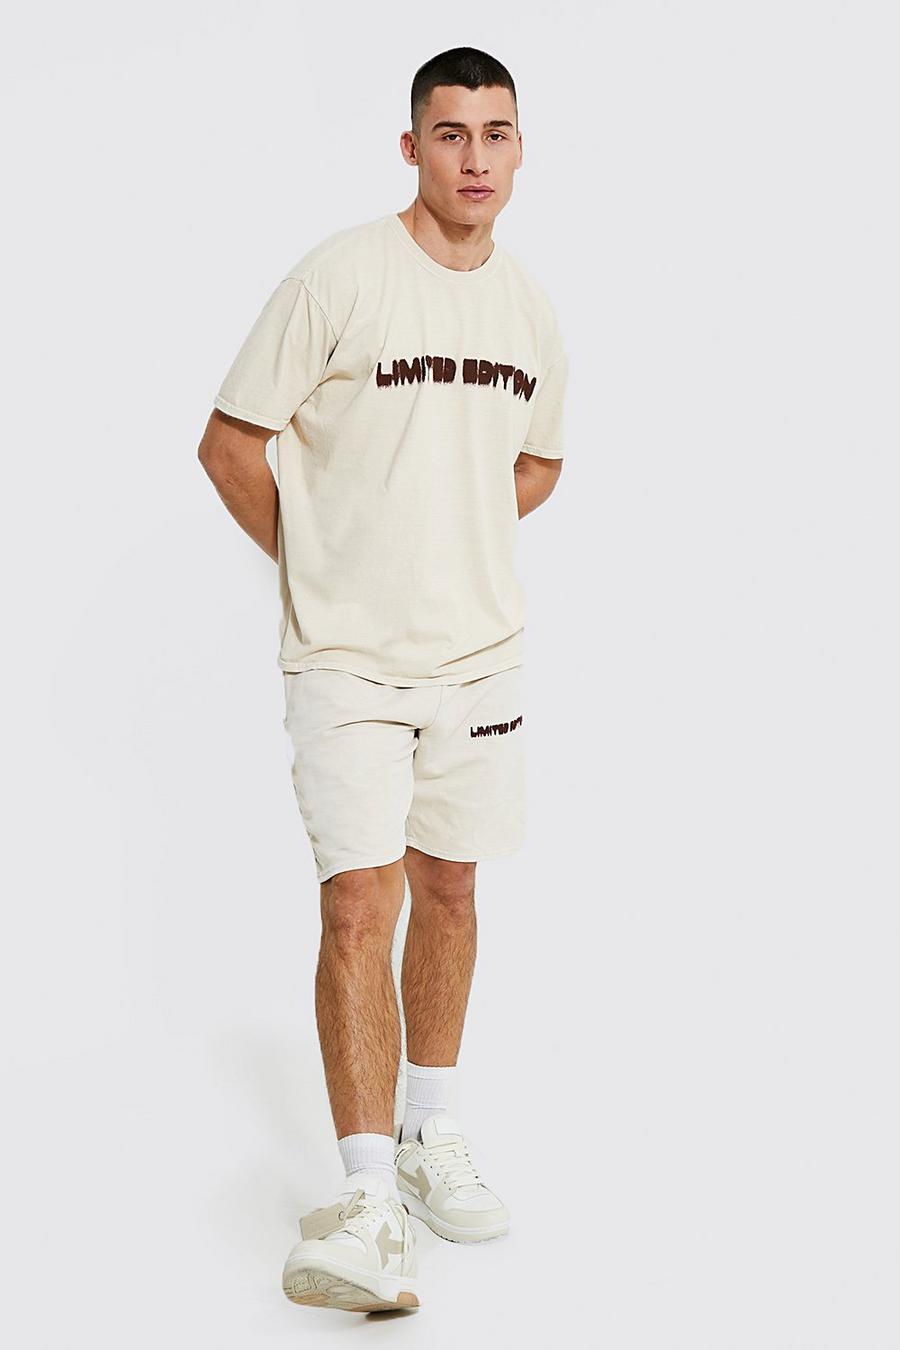 Conjunto oversize de pantalón corto y camiseta Limited Edt, Sand beige